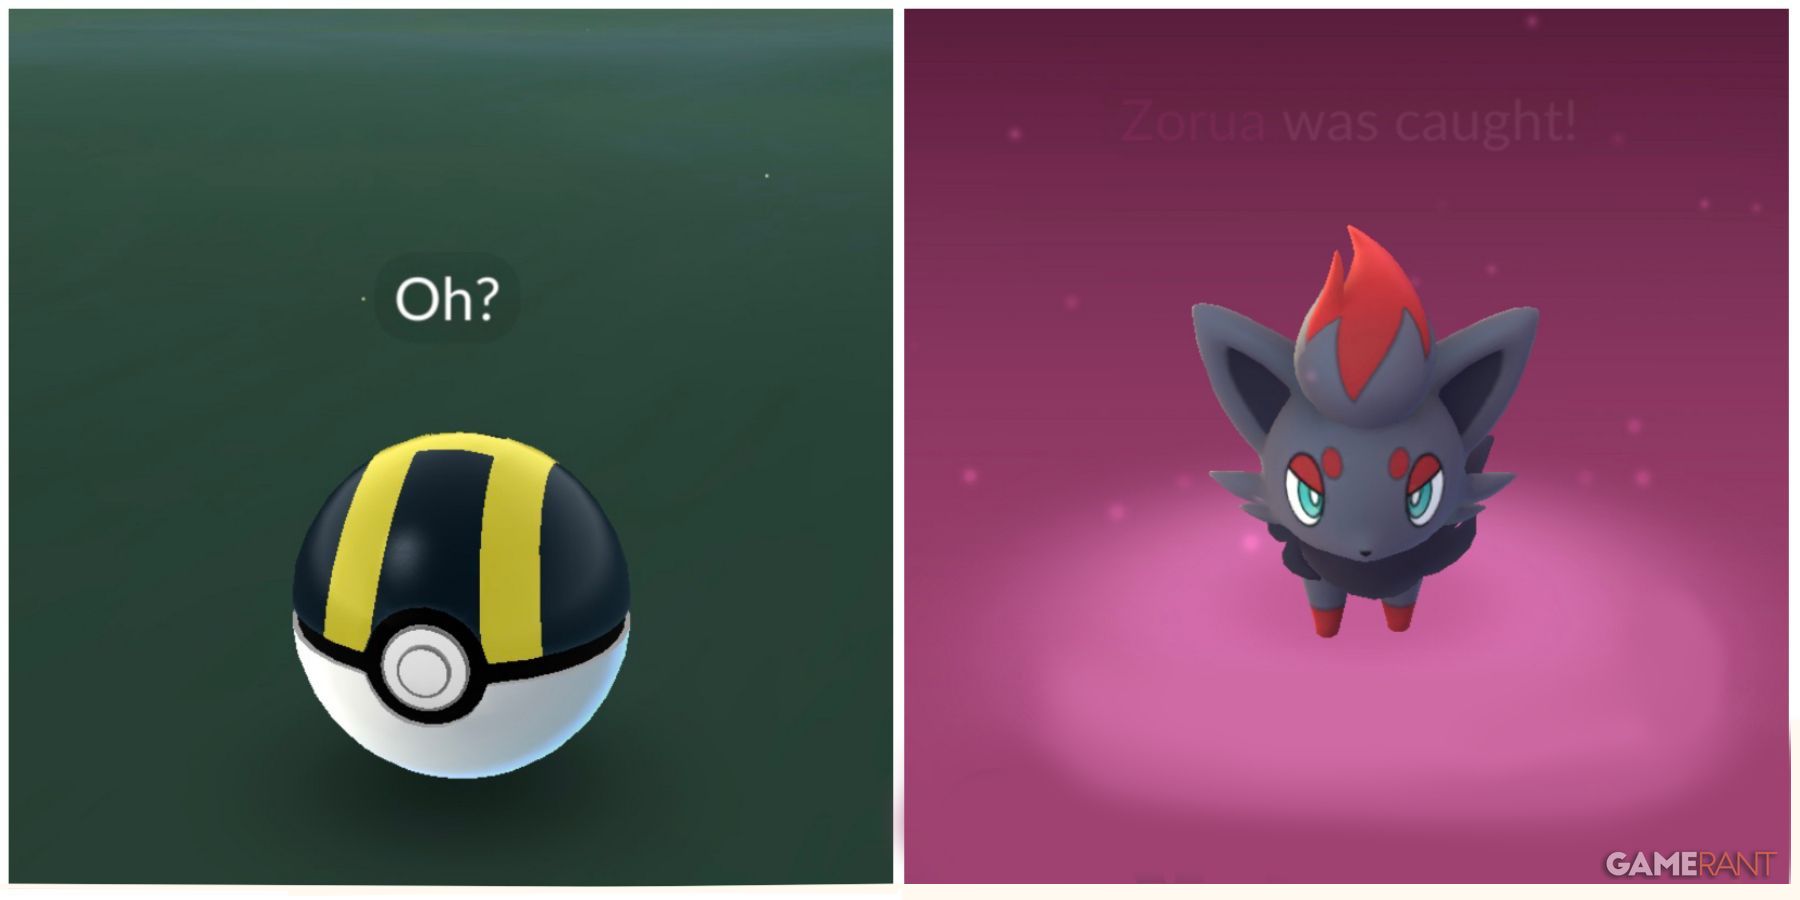 Pokémon Go Ditto Evolution, Locations, Nests, Moveset - PokéGo